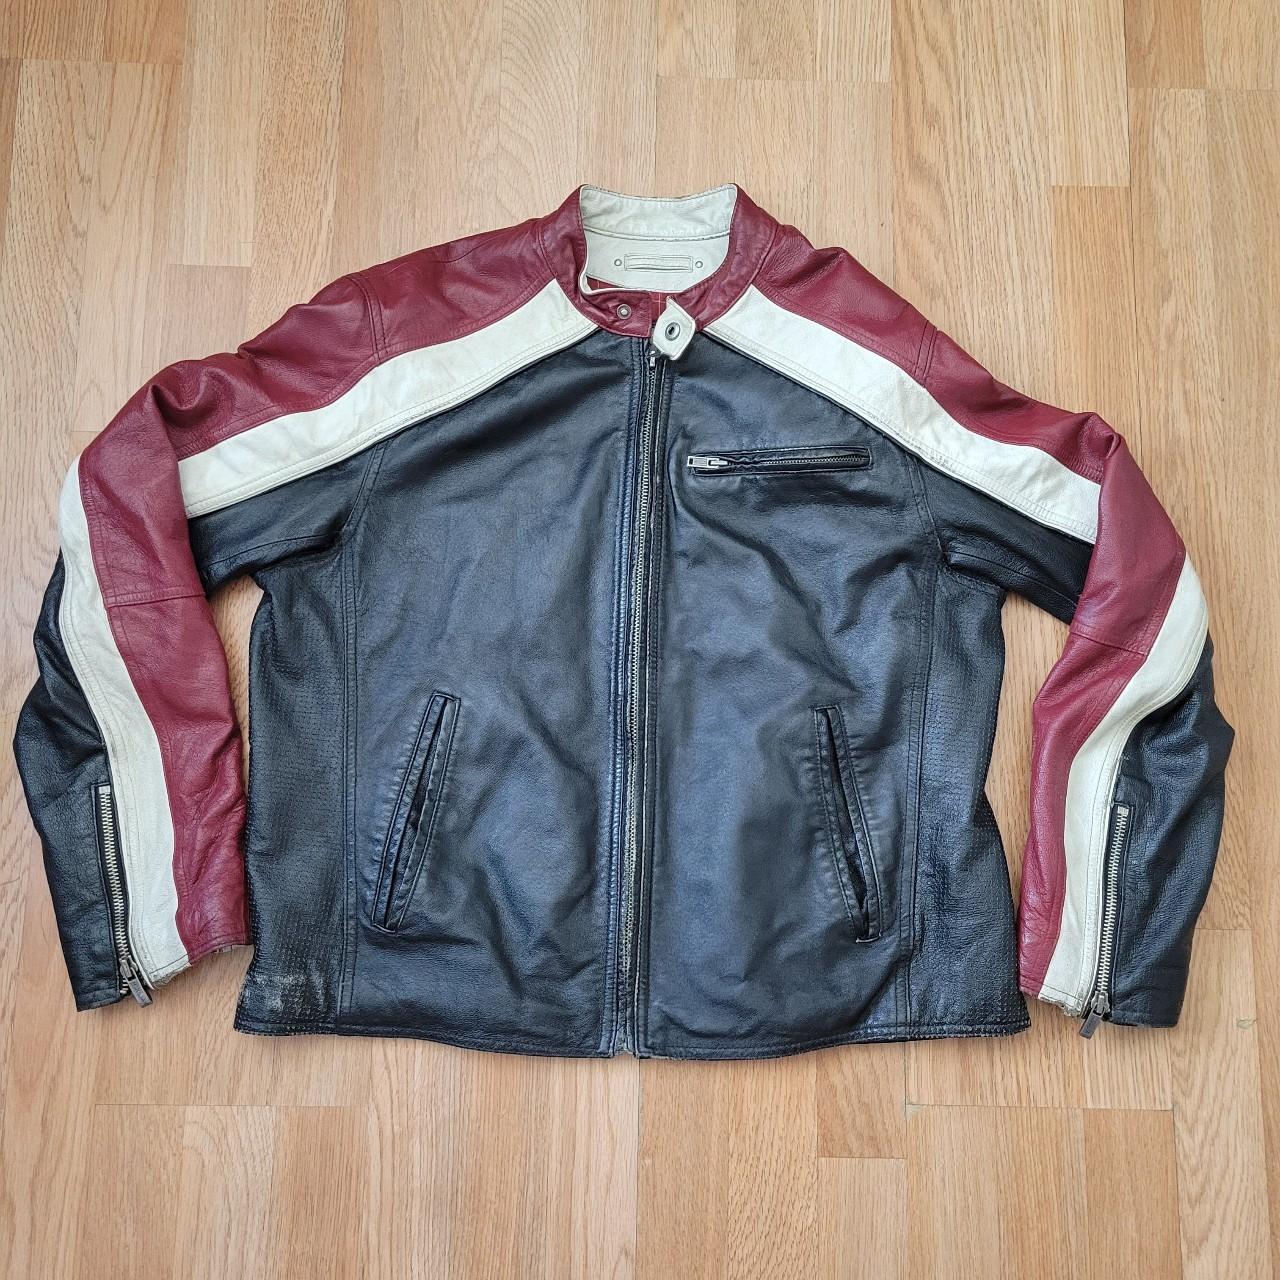 Vintage Wilson's Leather Motorcycle Jacket Size... - Depop